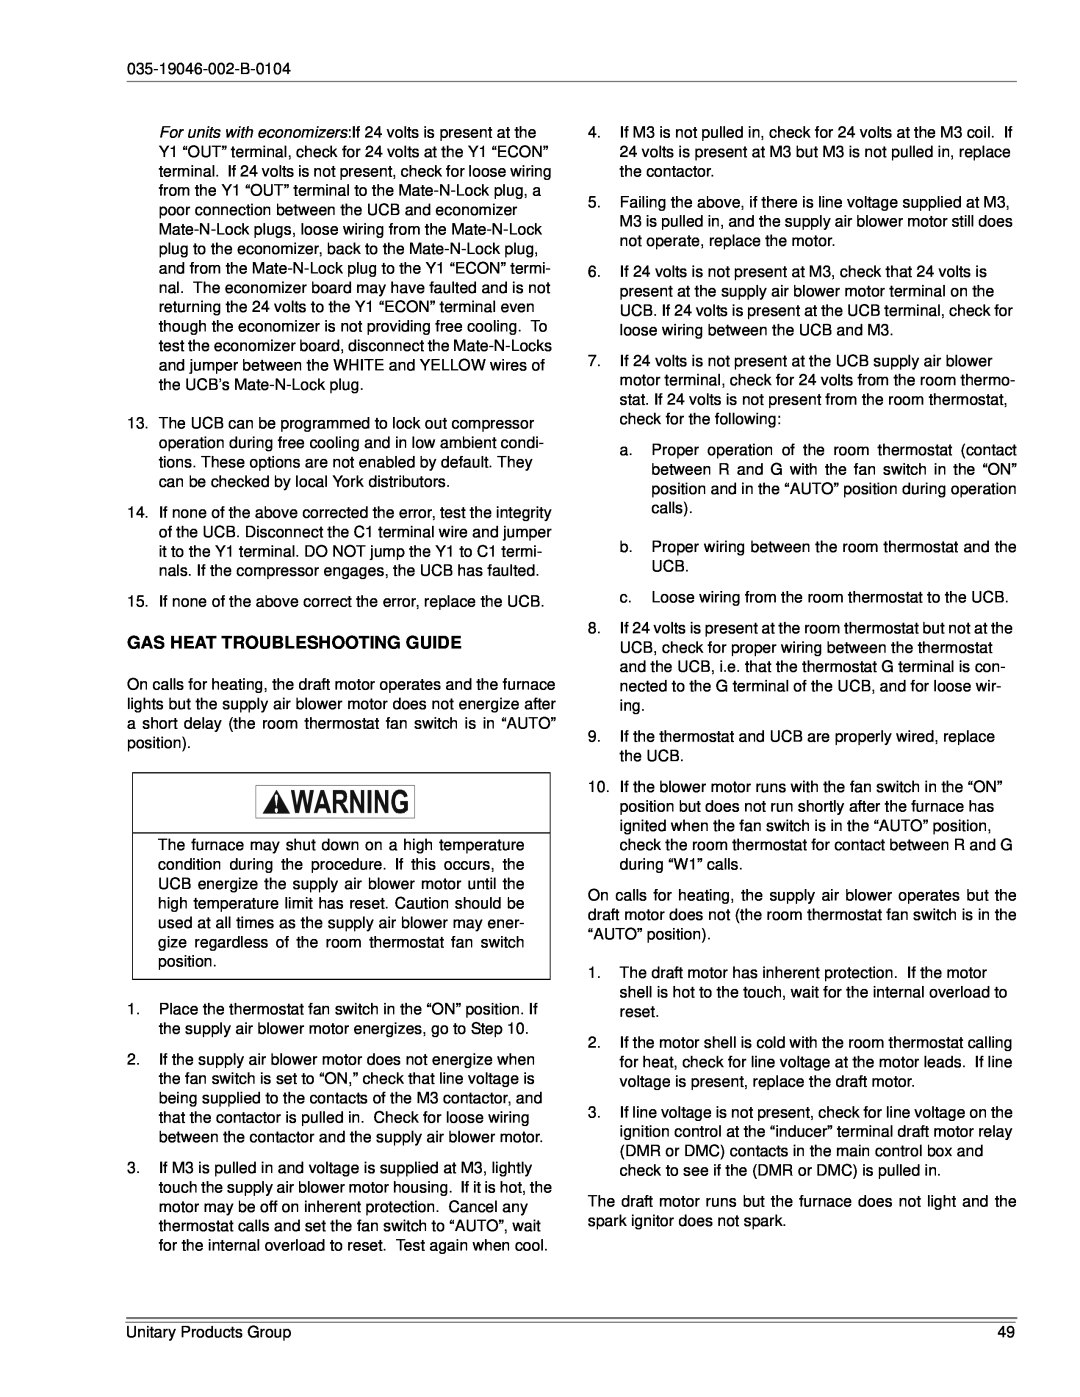 York DJ150 installation manual Gas Heat Troubleshooting Guide 